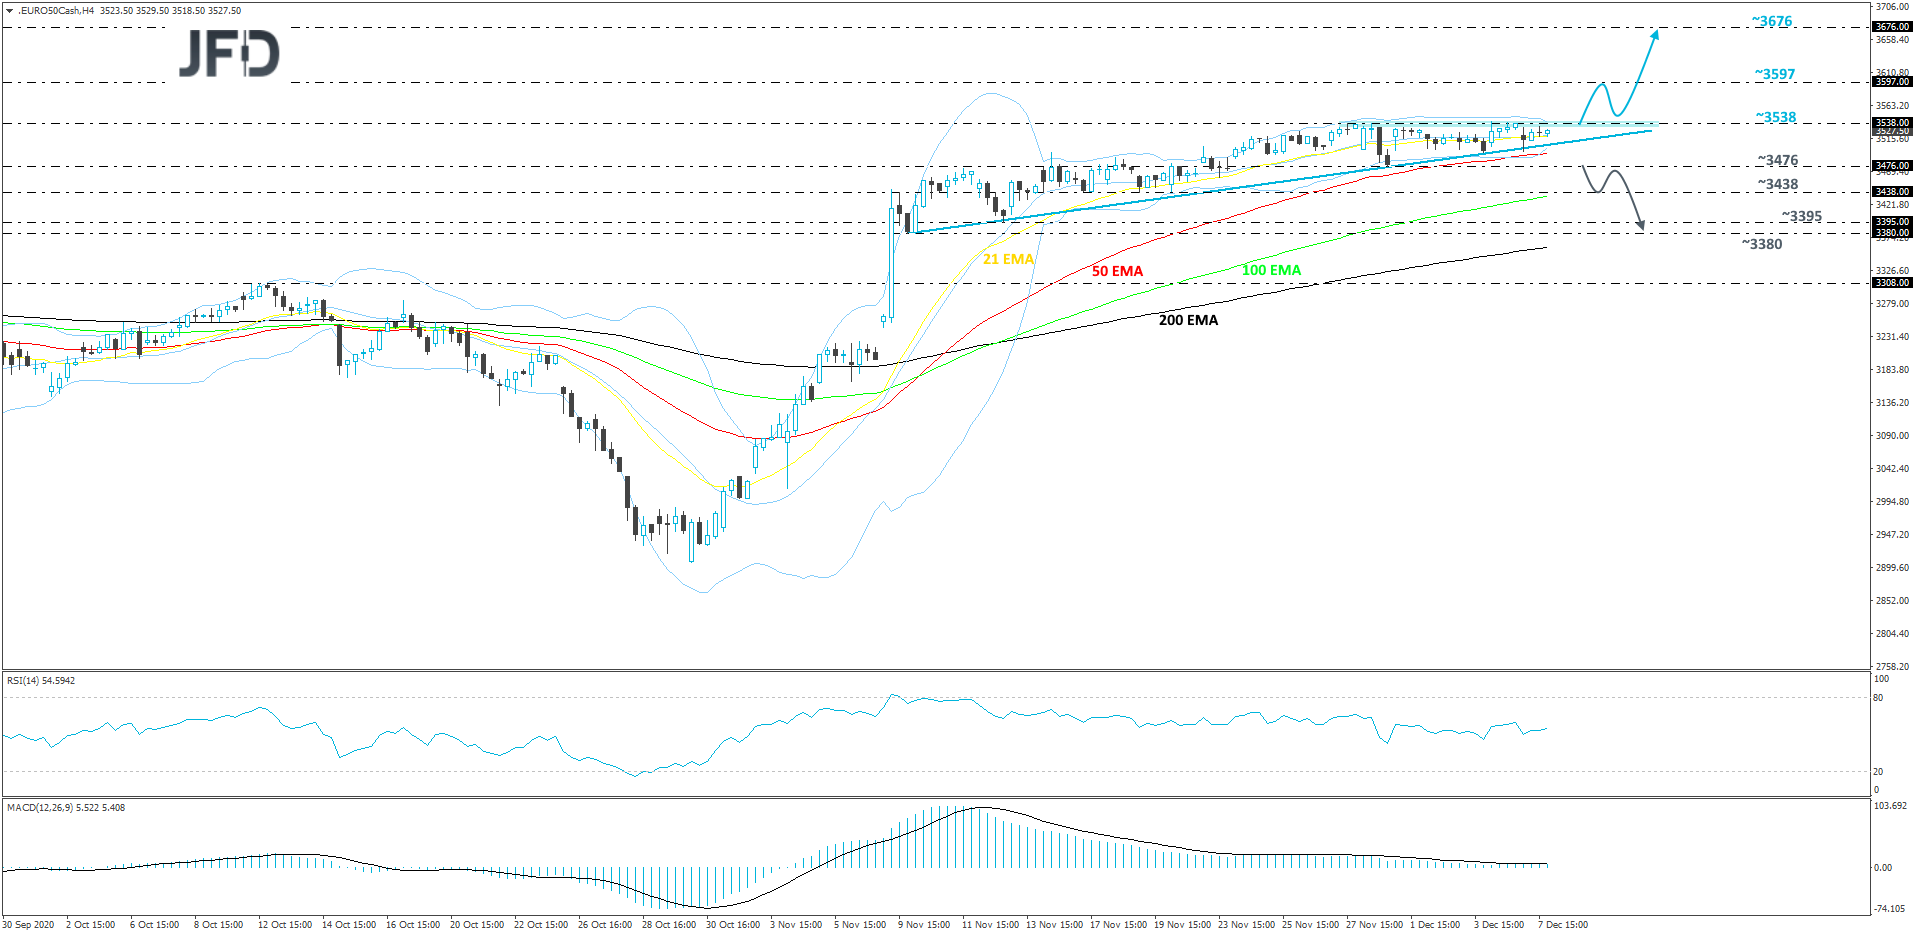 Euro Stoxx 50 4-hour chart technical analysis